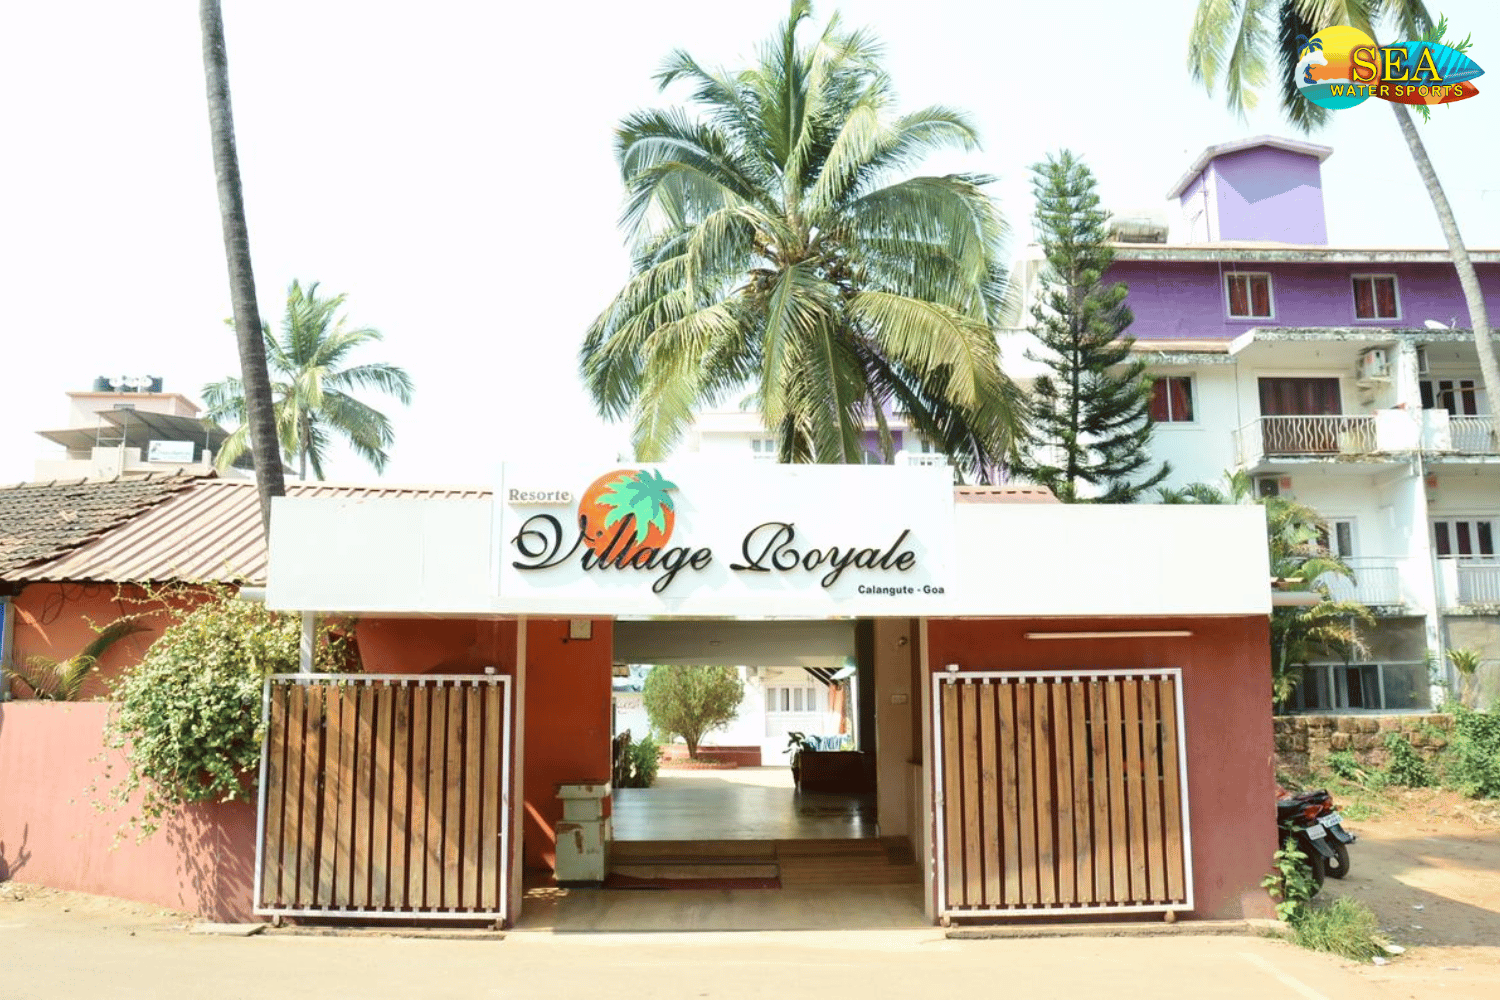 Resorte Village Royale